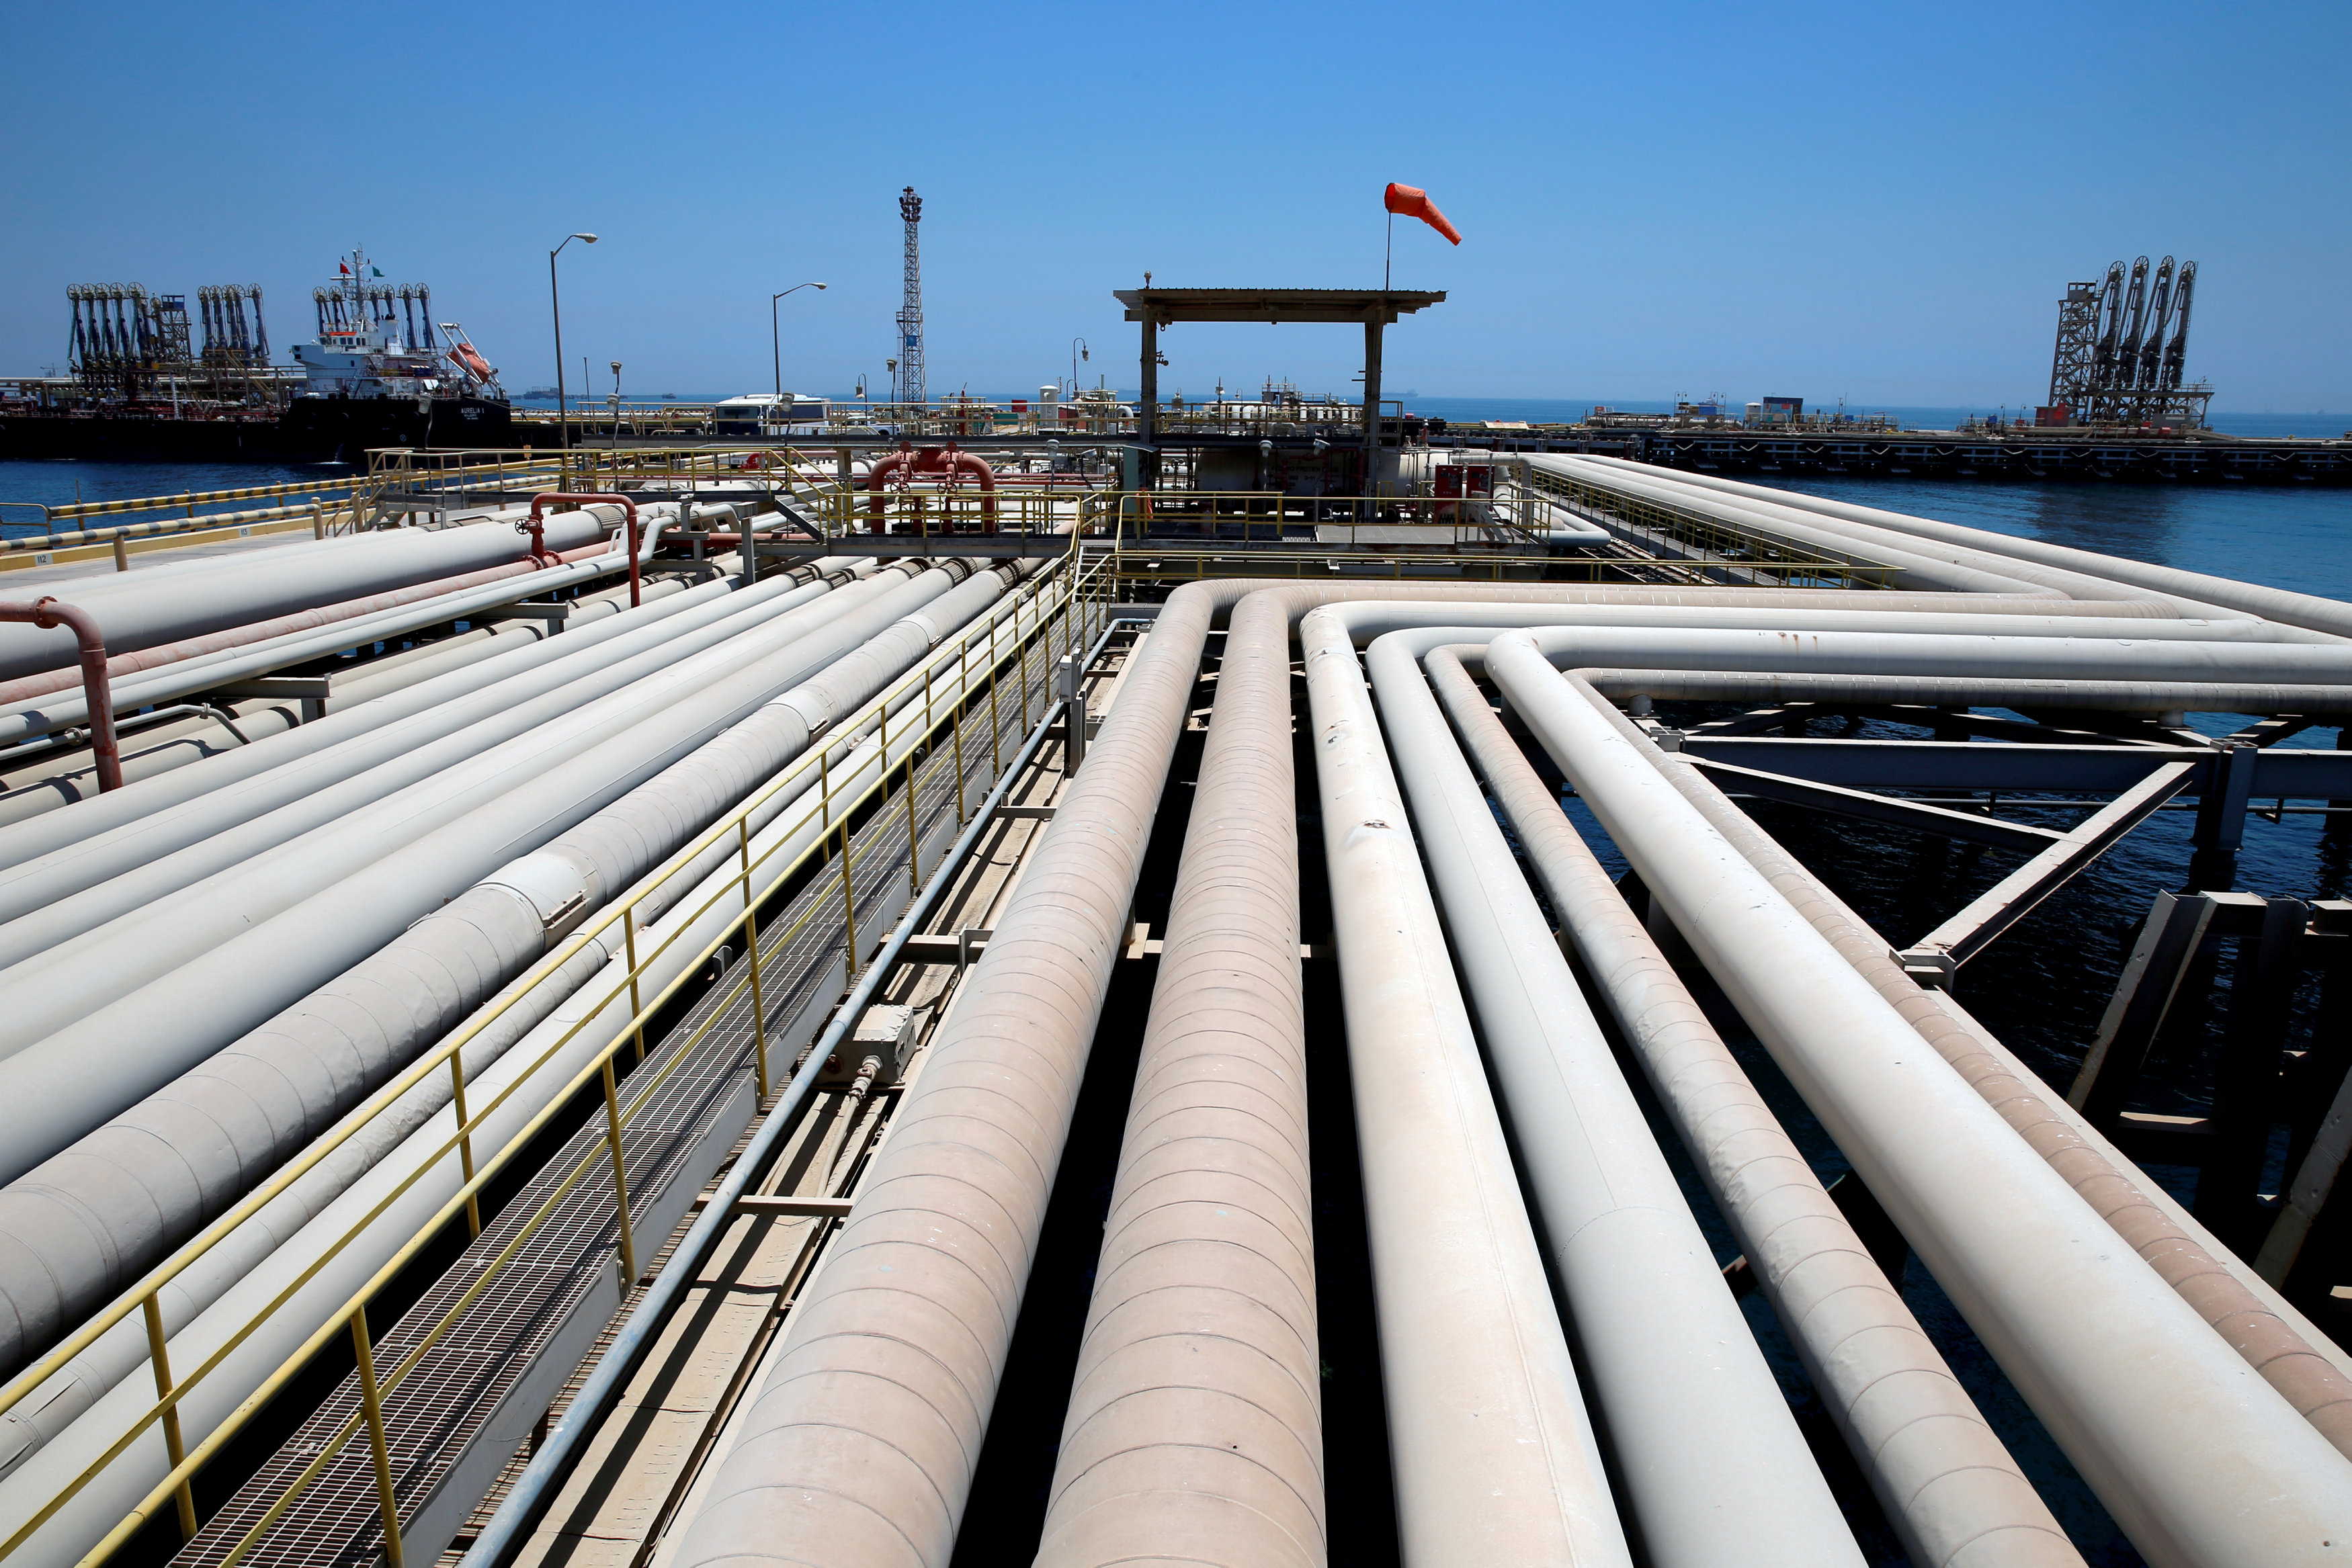 Saudi Arabia raised oil output by around 500,000 bpd in June